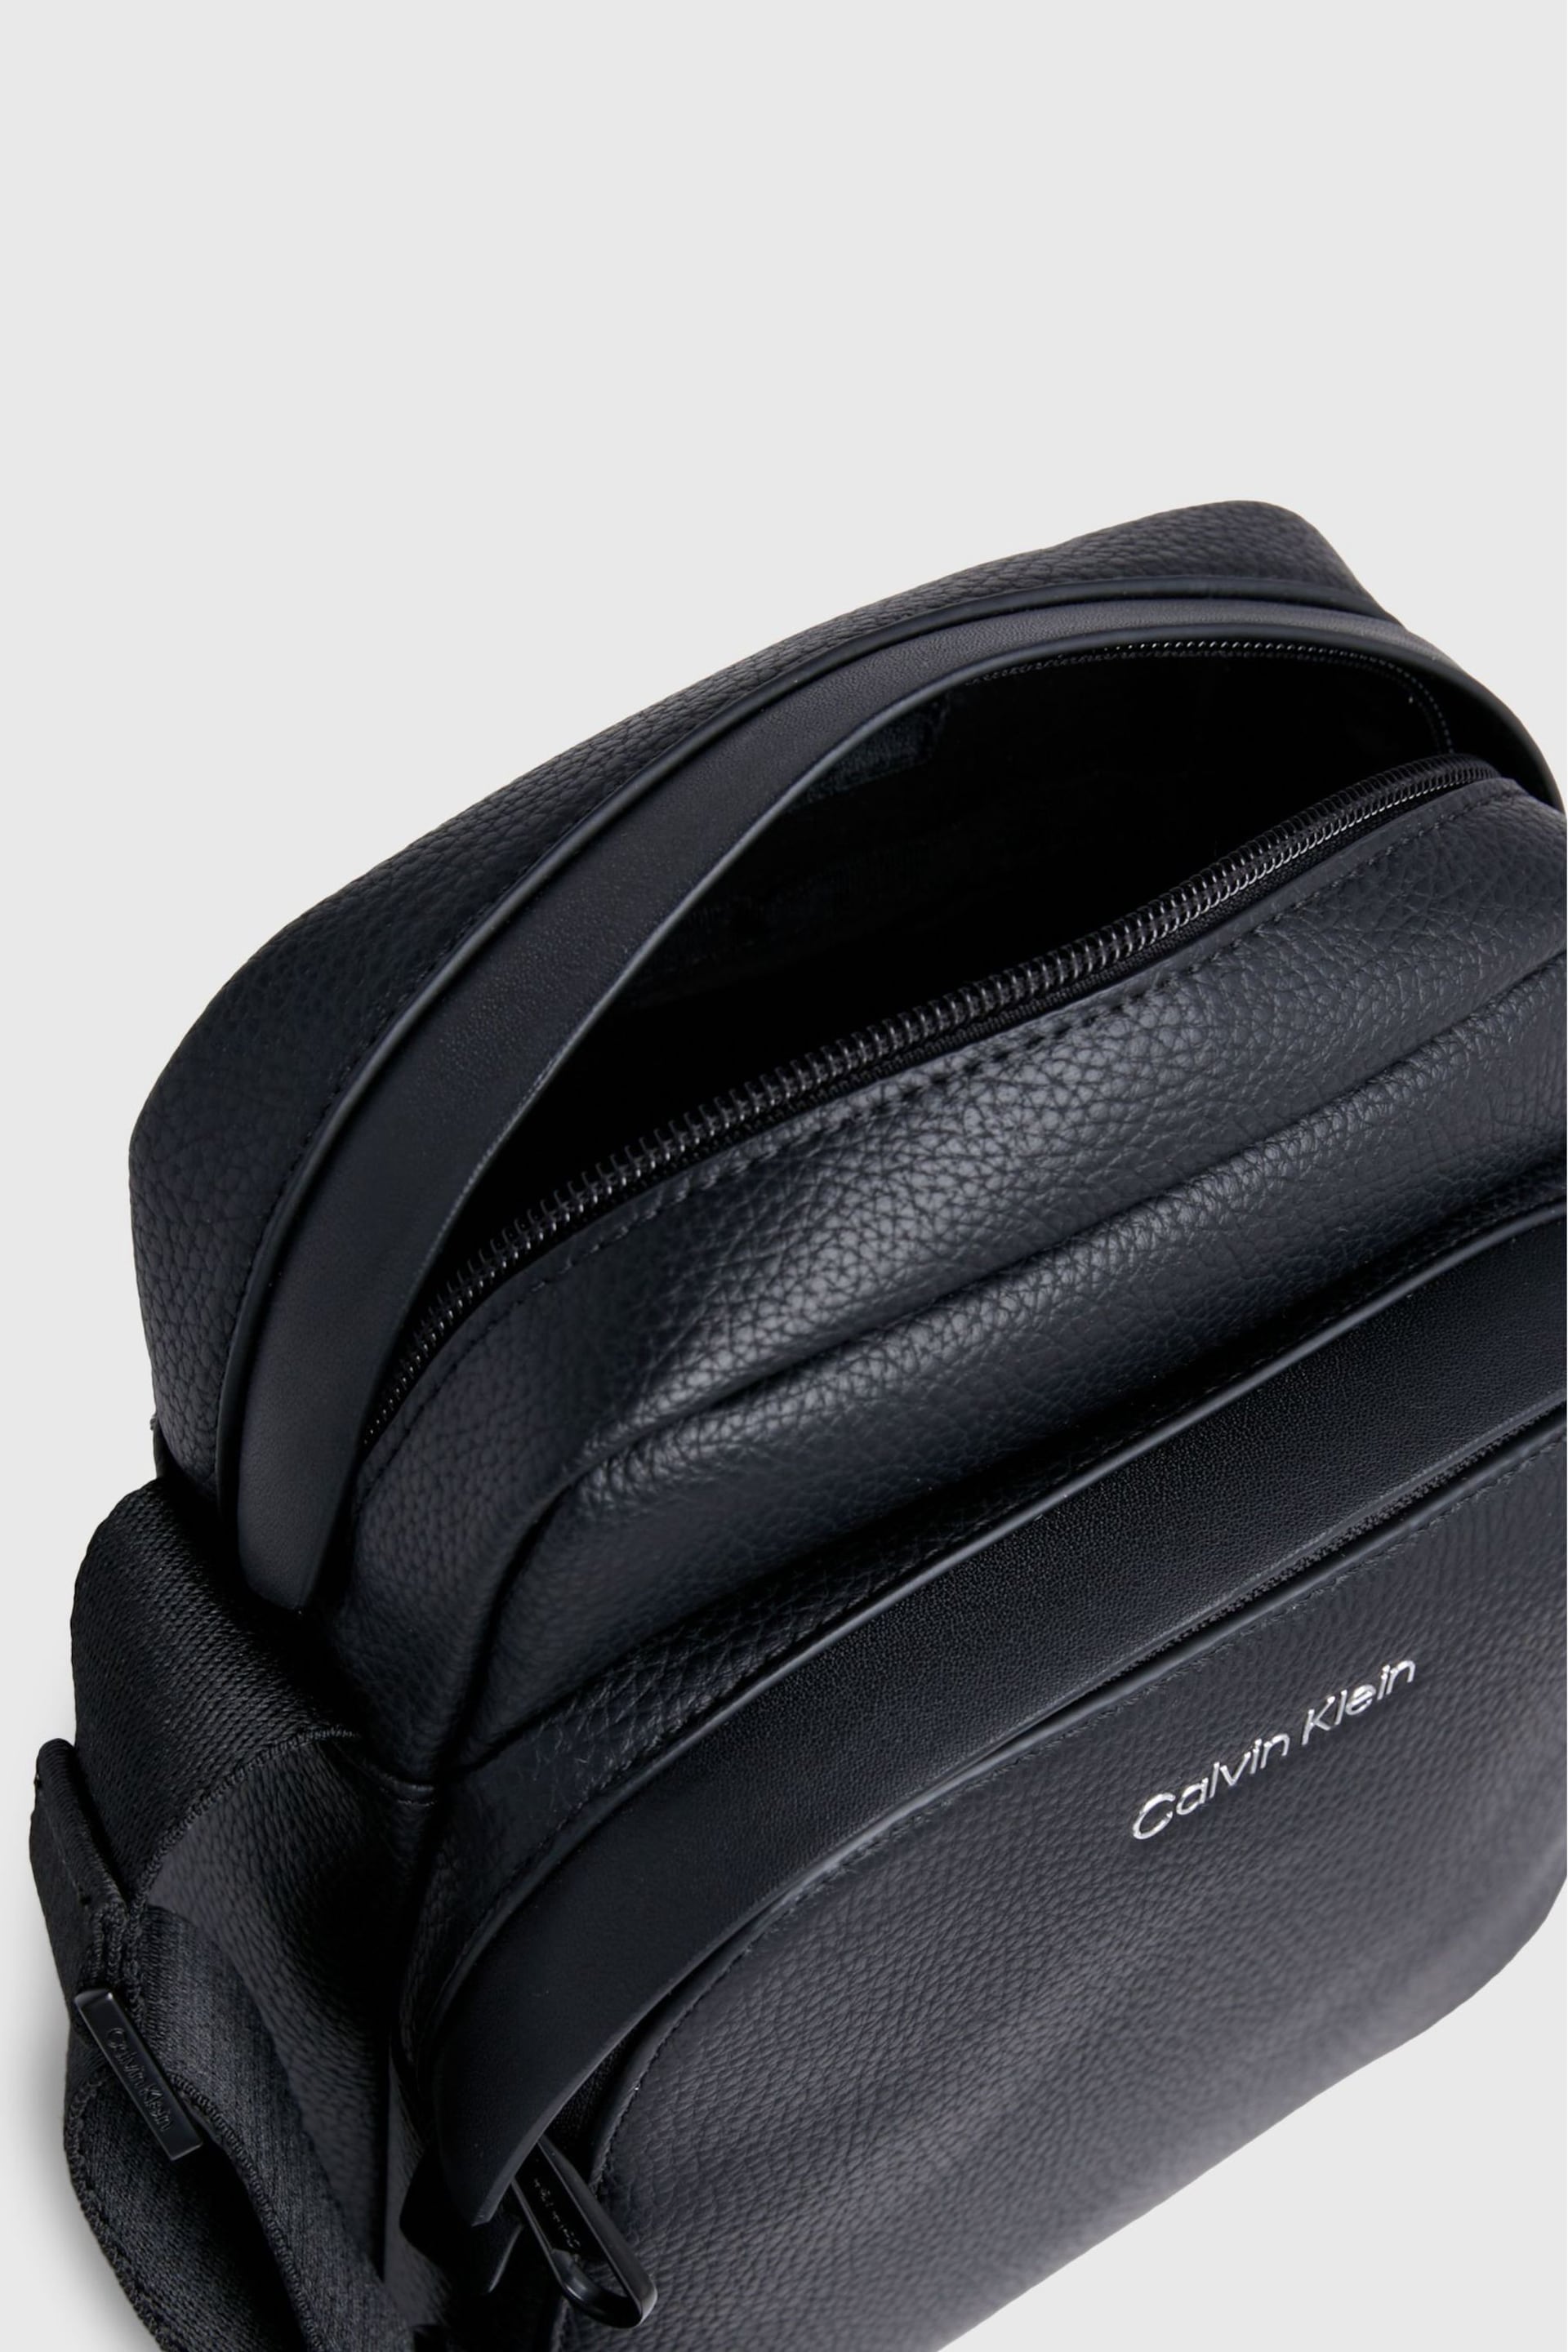 Calvin Klein Black Logo Messenger Bag - Image 6 of 7